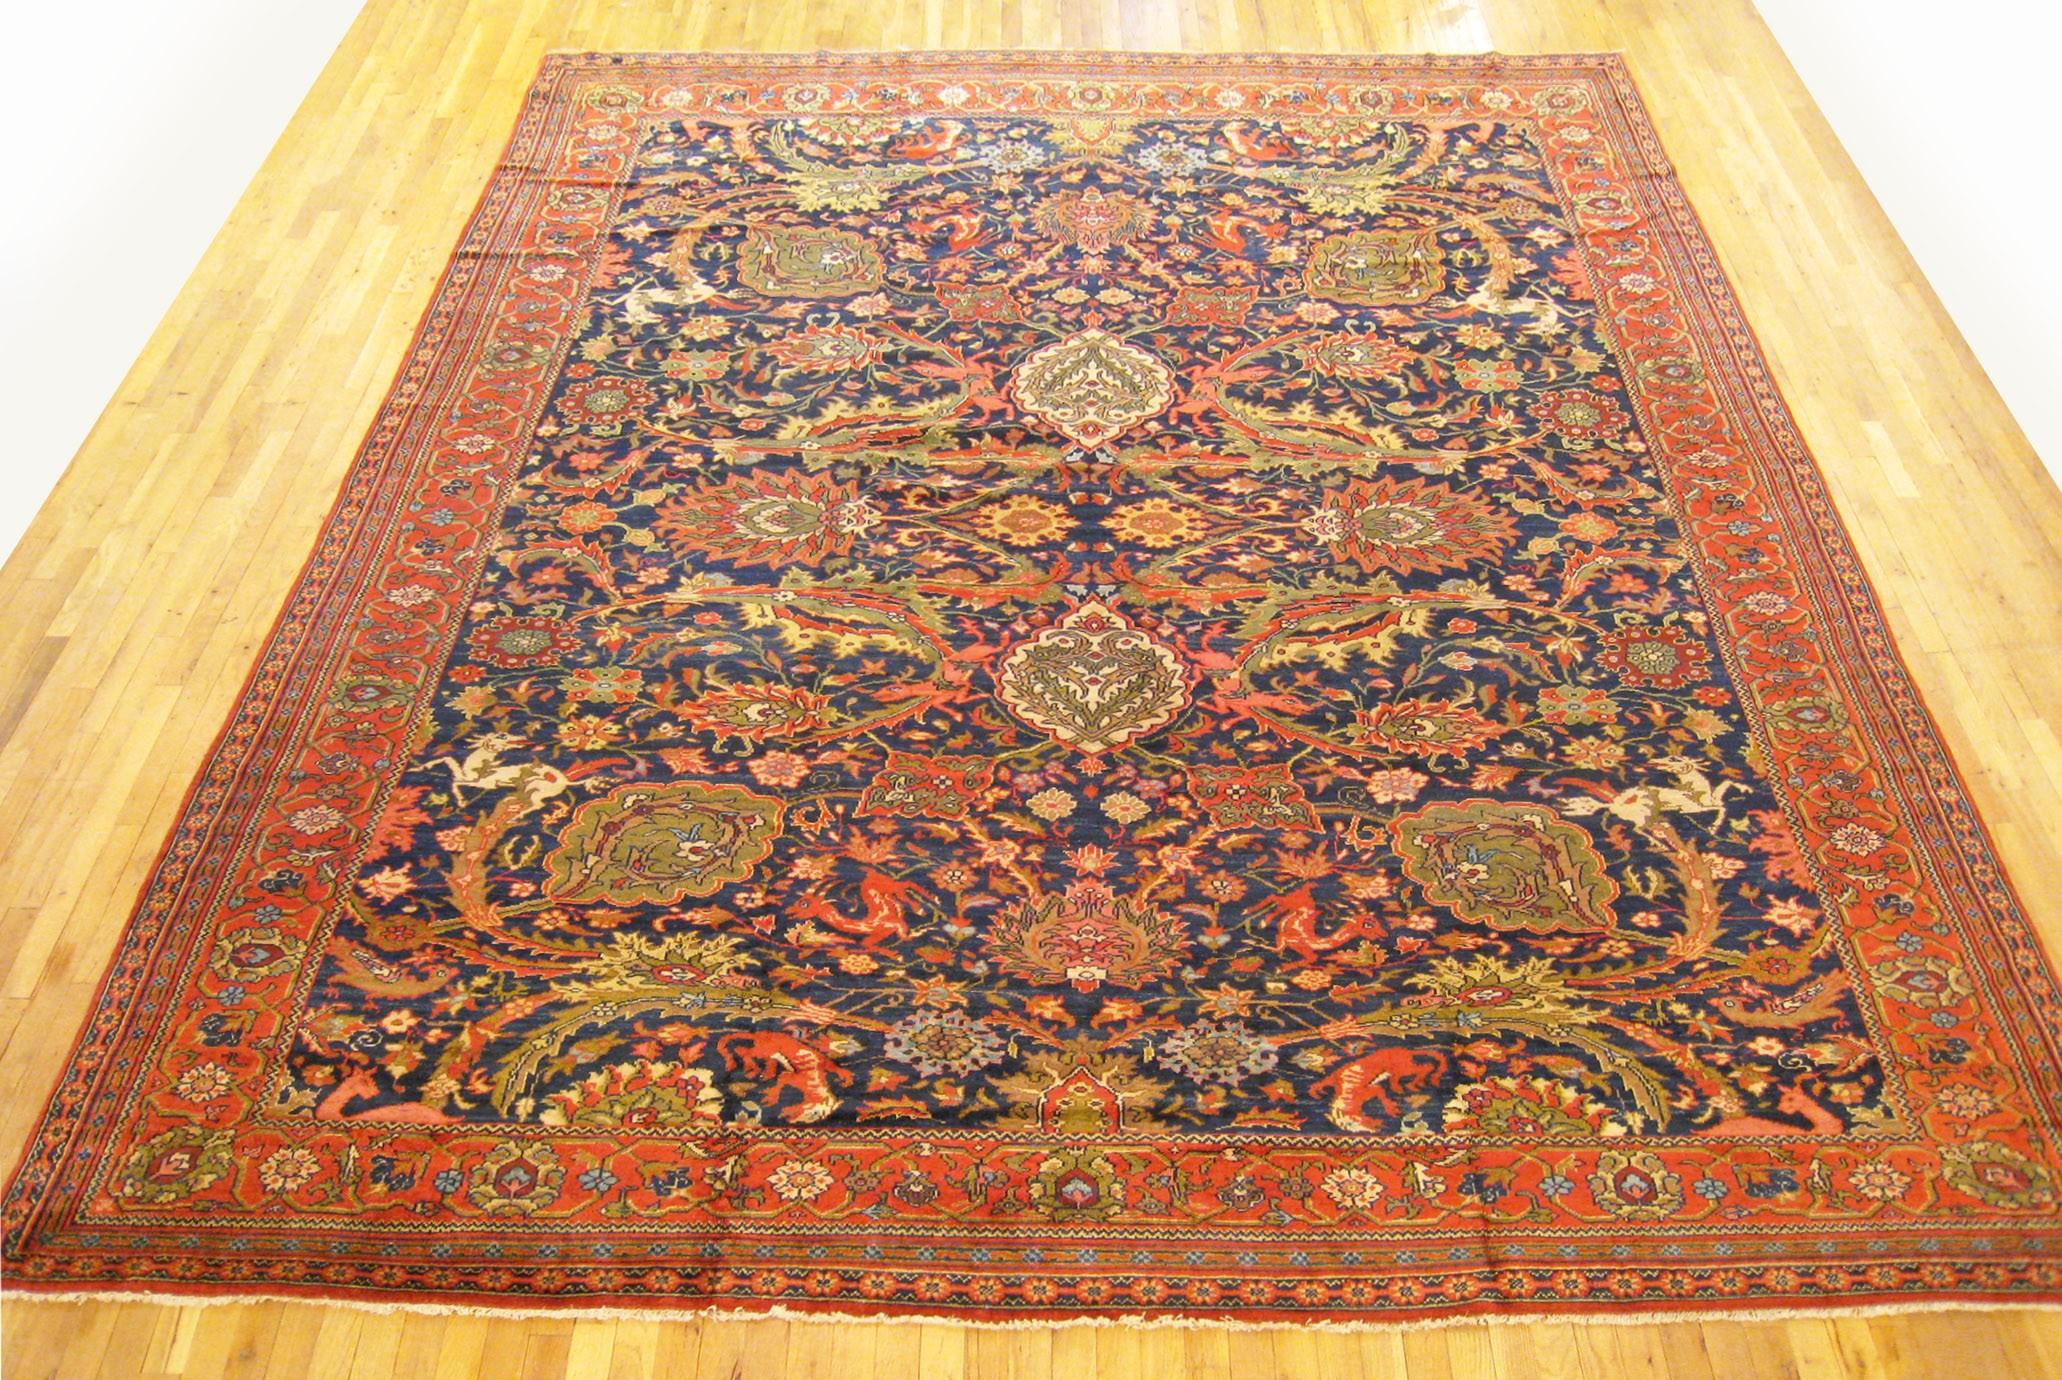 Antique Ferahan Oriental rug, circa 1910, Room size

An antique Ferahan oriental rug, size 13'3